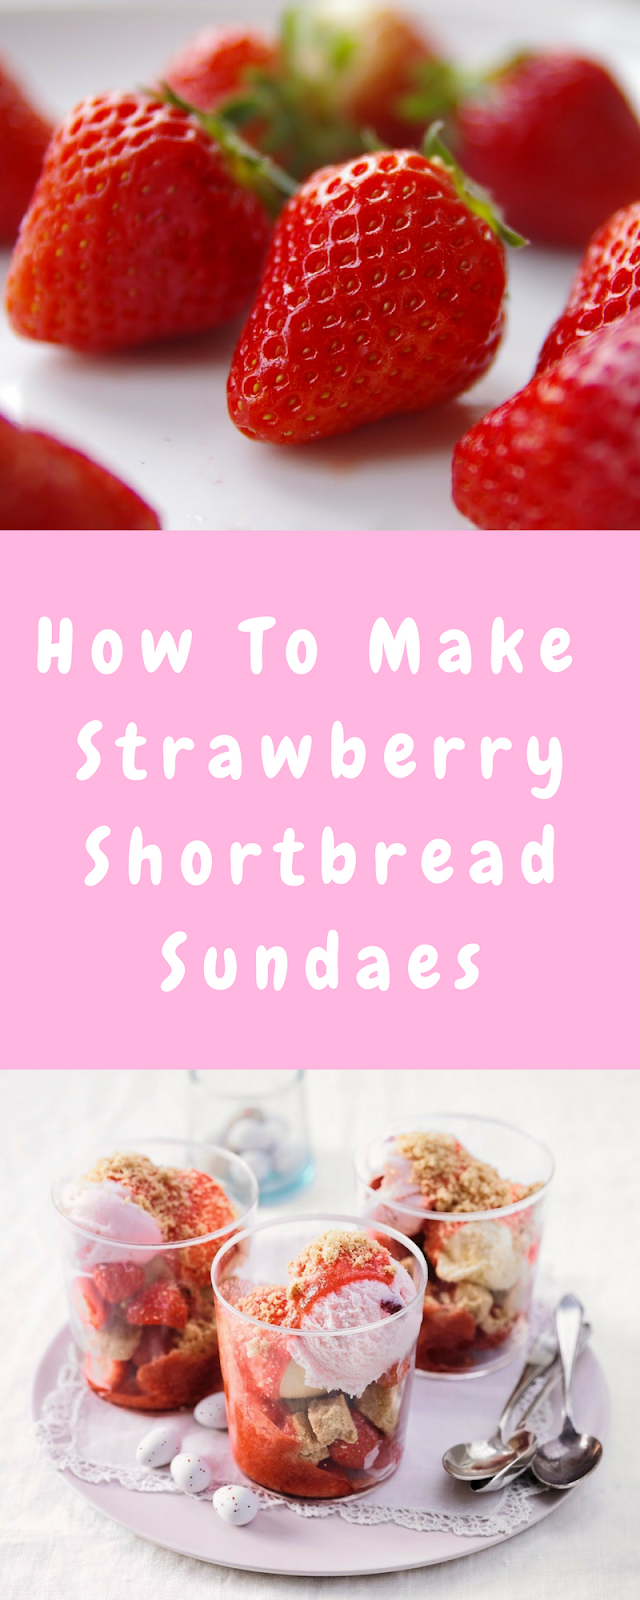 Strawberry Shortbread Sundaes